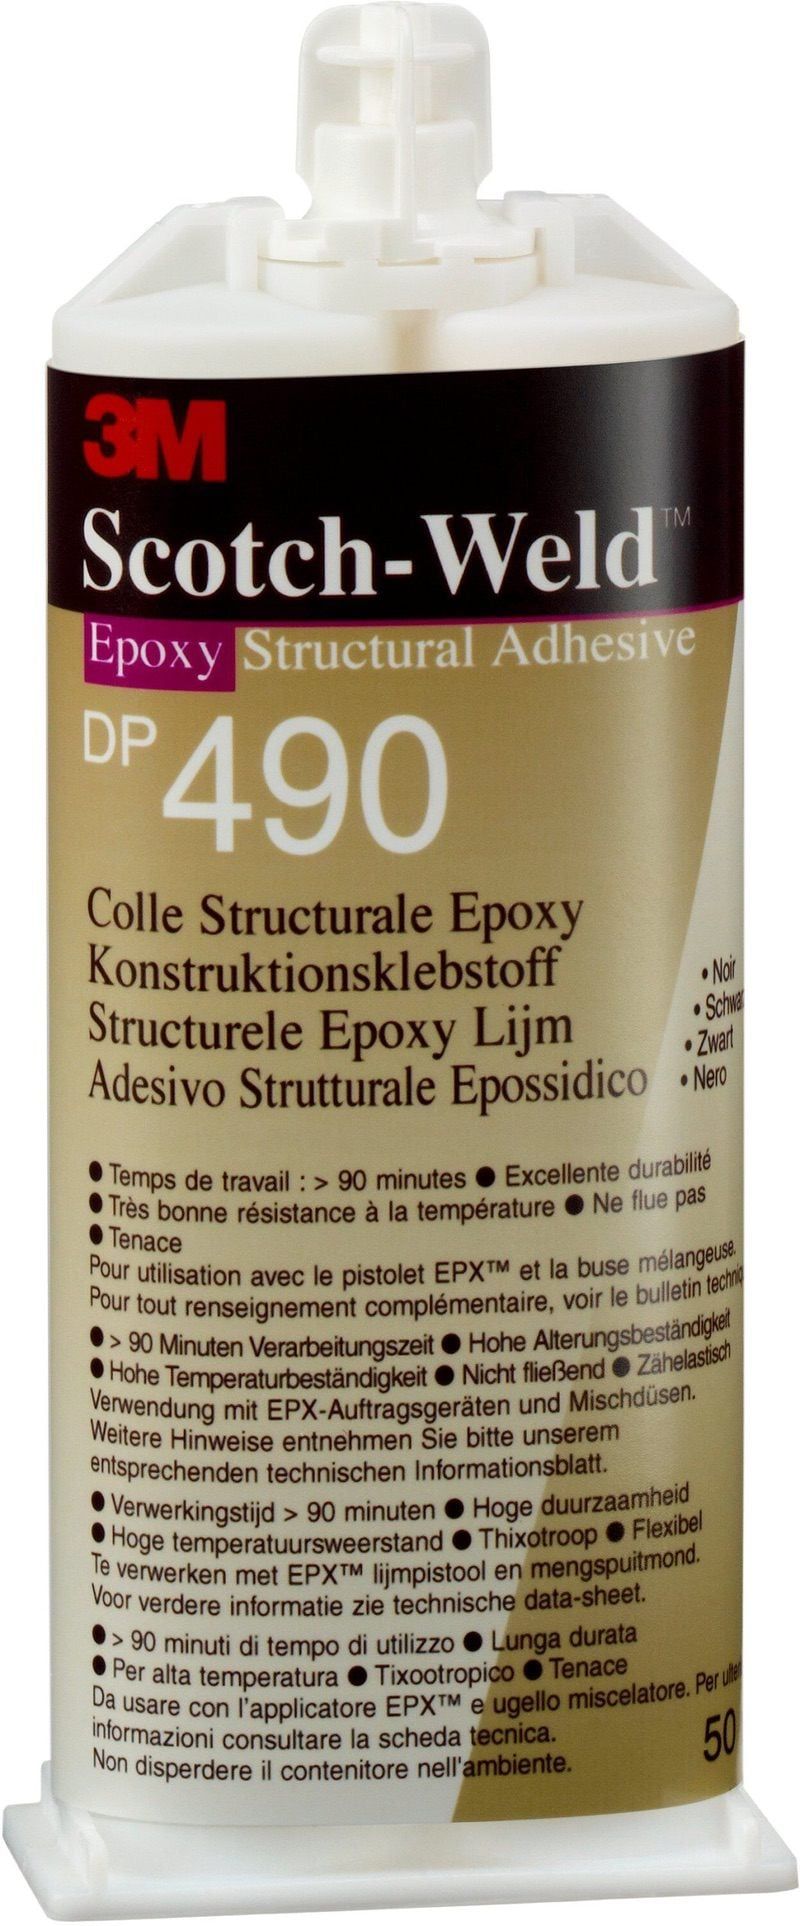 3M™ Scotch-Weld™ Epoxy Adhesive DP490, Black, 50 ml, Label1